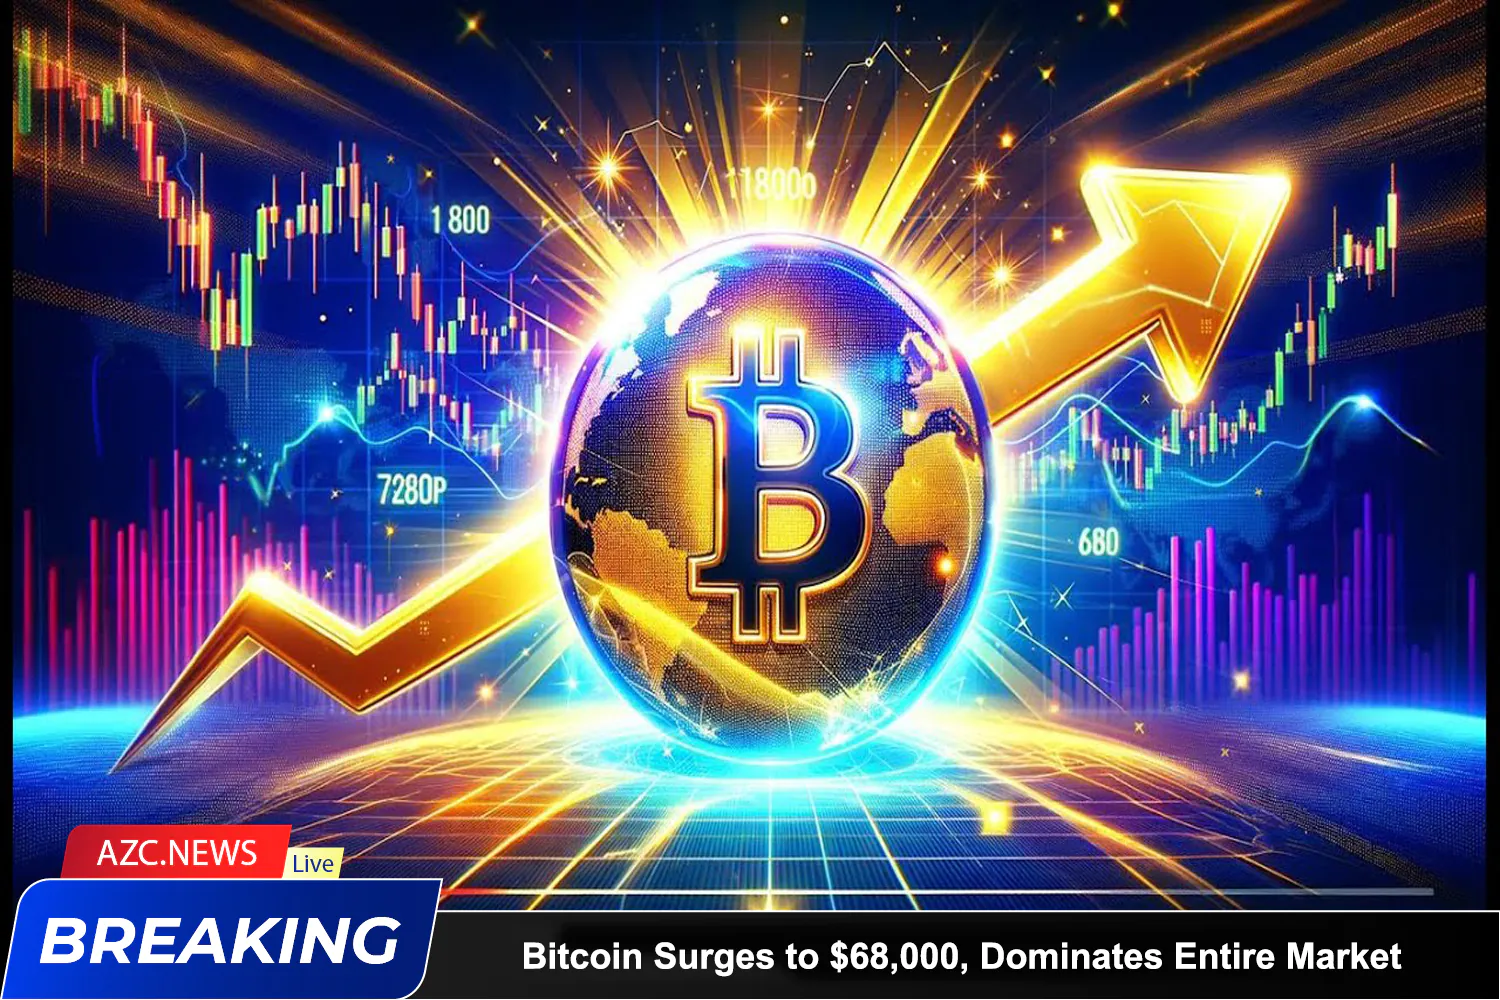 Azcnews Bitcoin Surges To $68,000, Dominates Entire Market